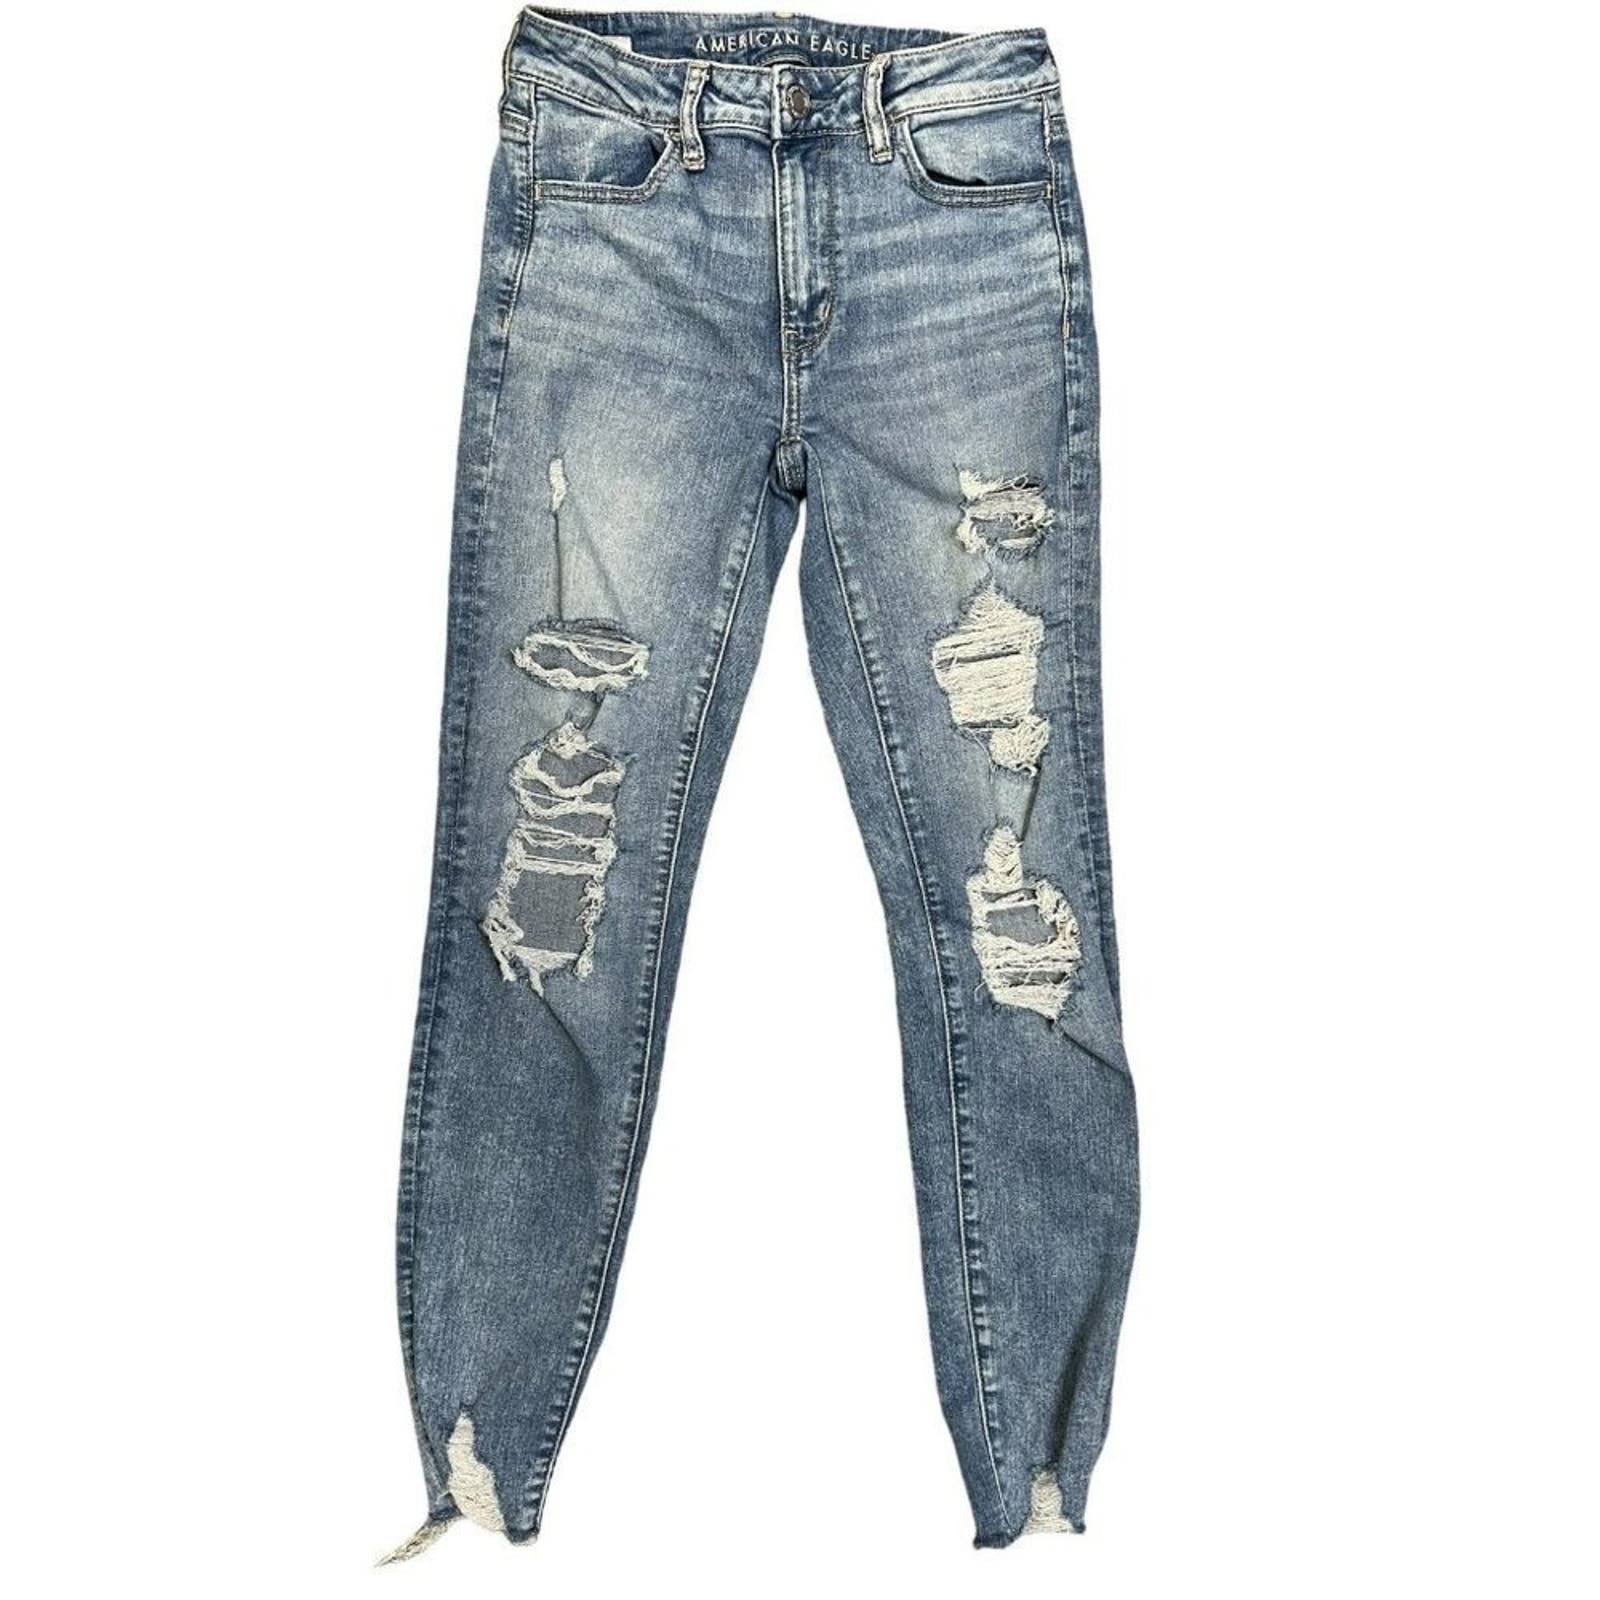 Popular American Eagle Hi-Rise Jegging Distressed Jeans Size 4 ouUNcQQGW Discount